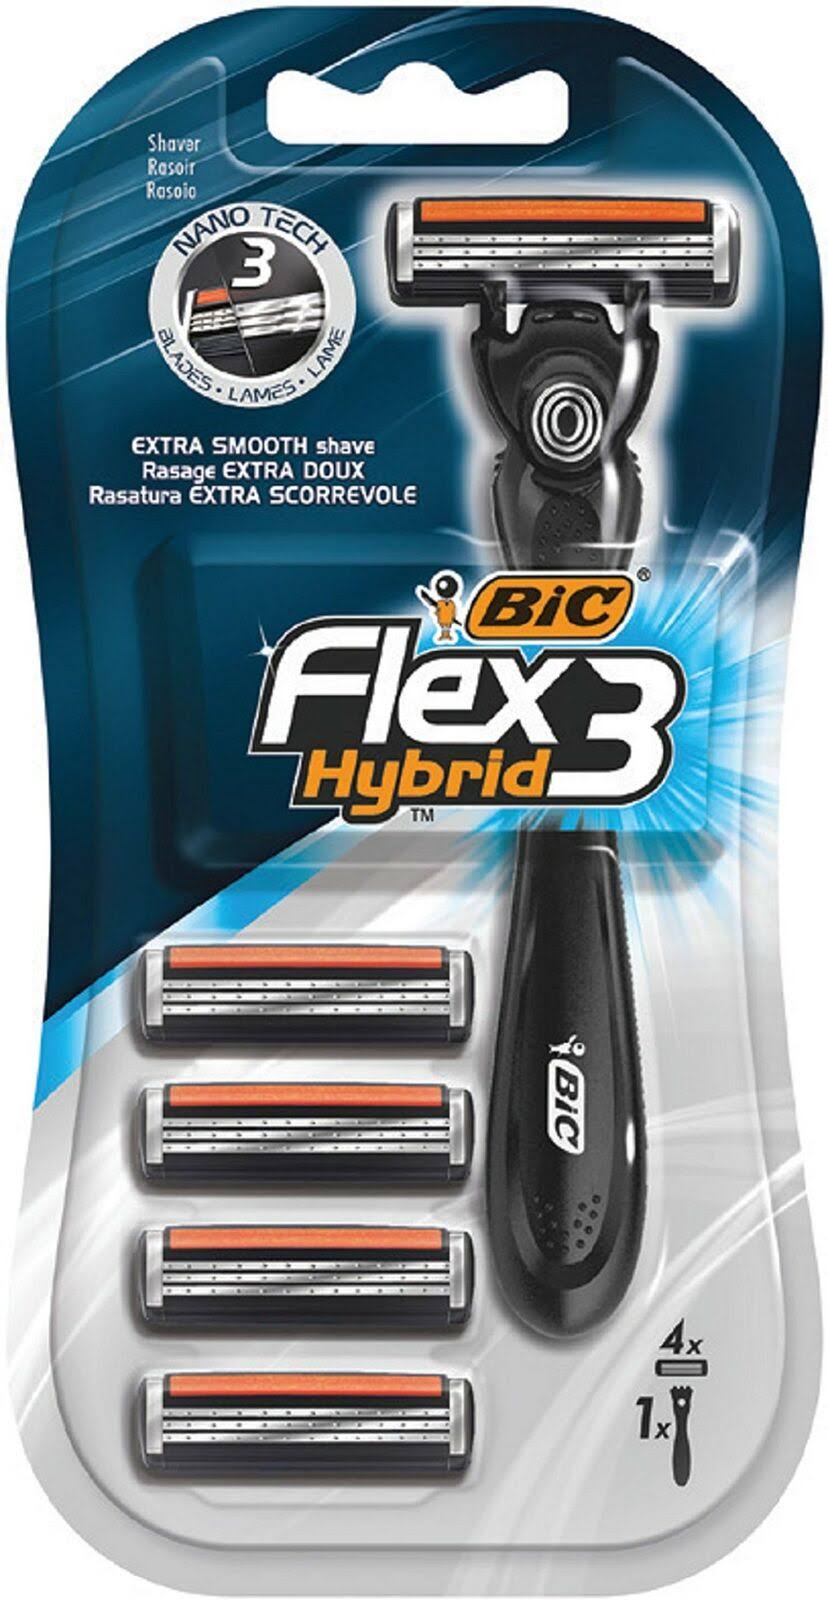 BIC Flex 3 Hybrid Men's Razors 1 Handle + 4 Refills Pack